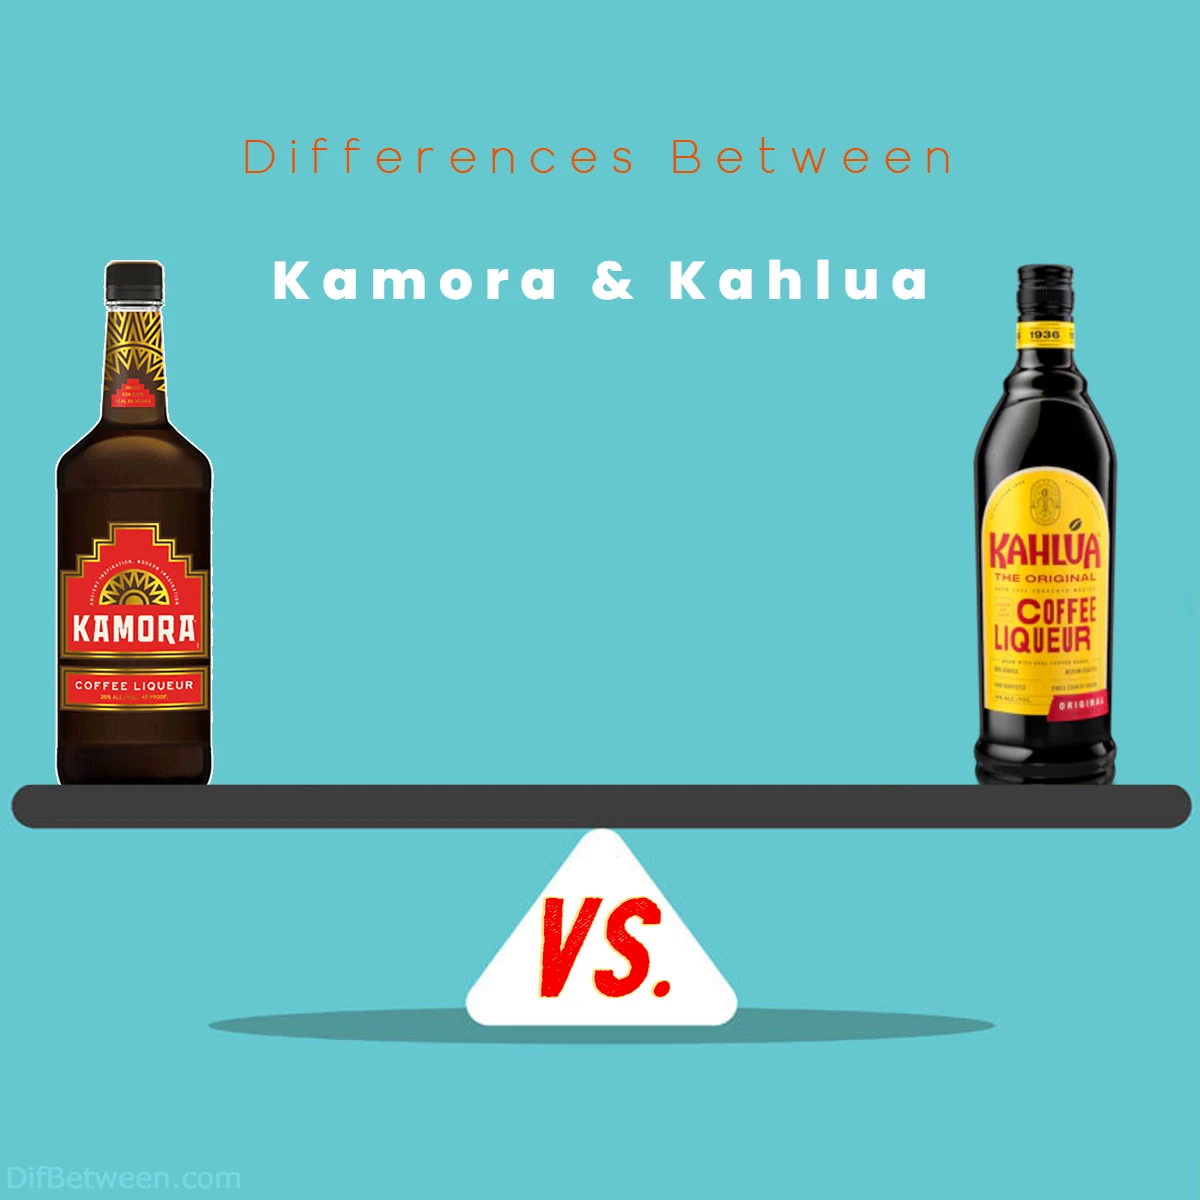 Differences Between Kahlua vs Kamora